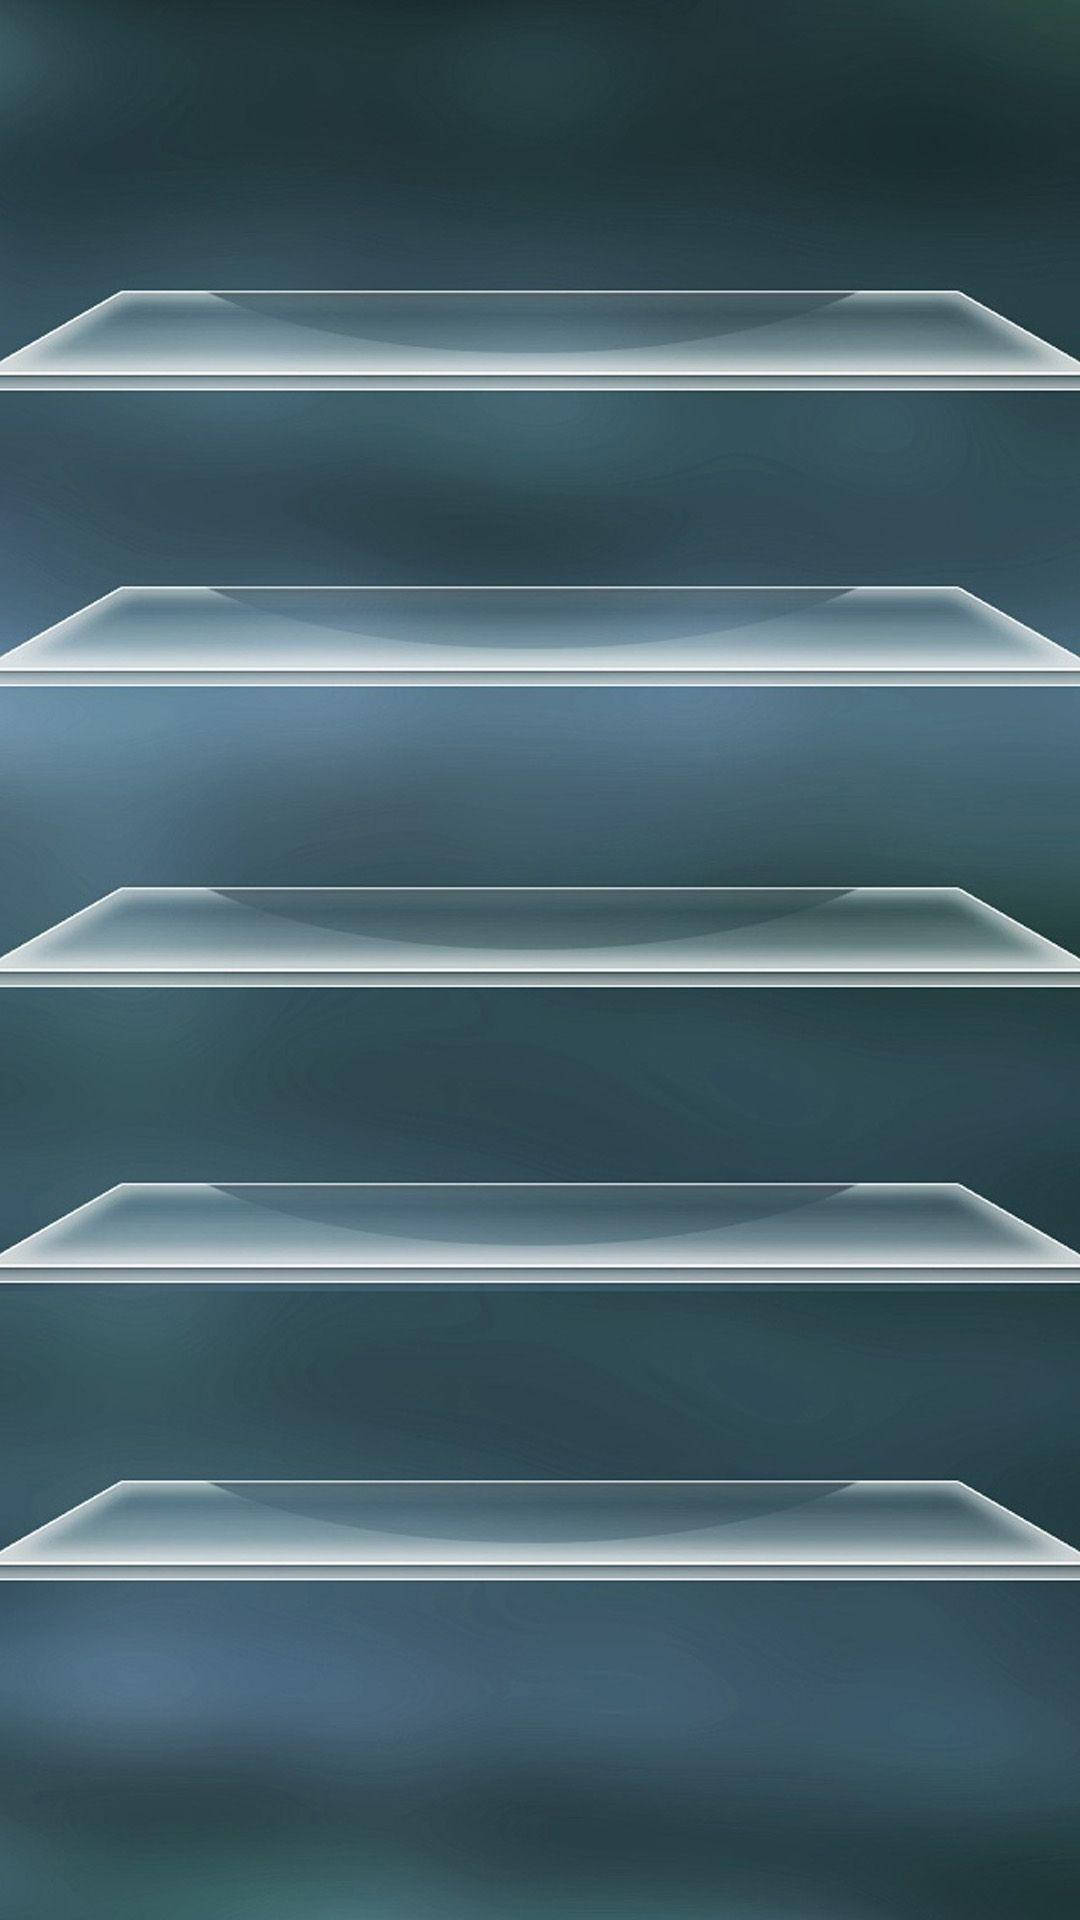 Glass Shelves Iphone 6s Plus Wallpaper